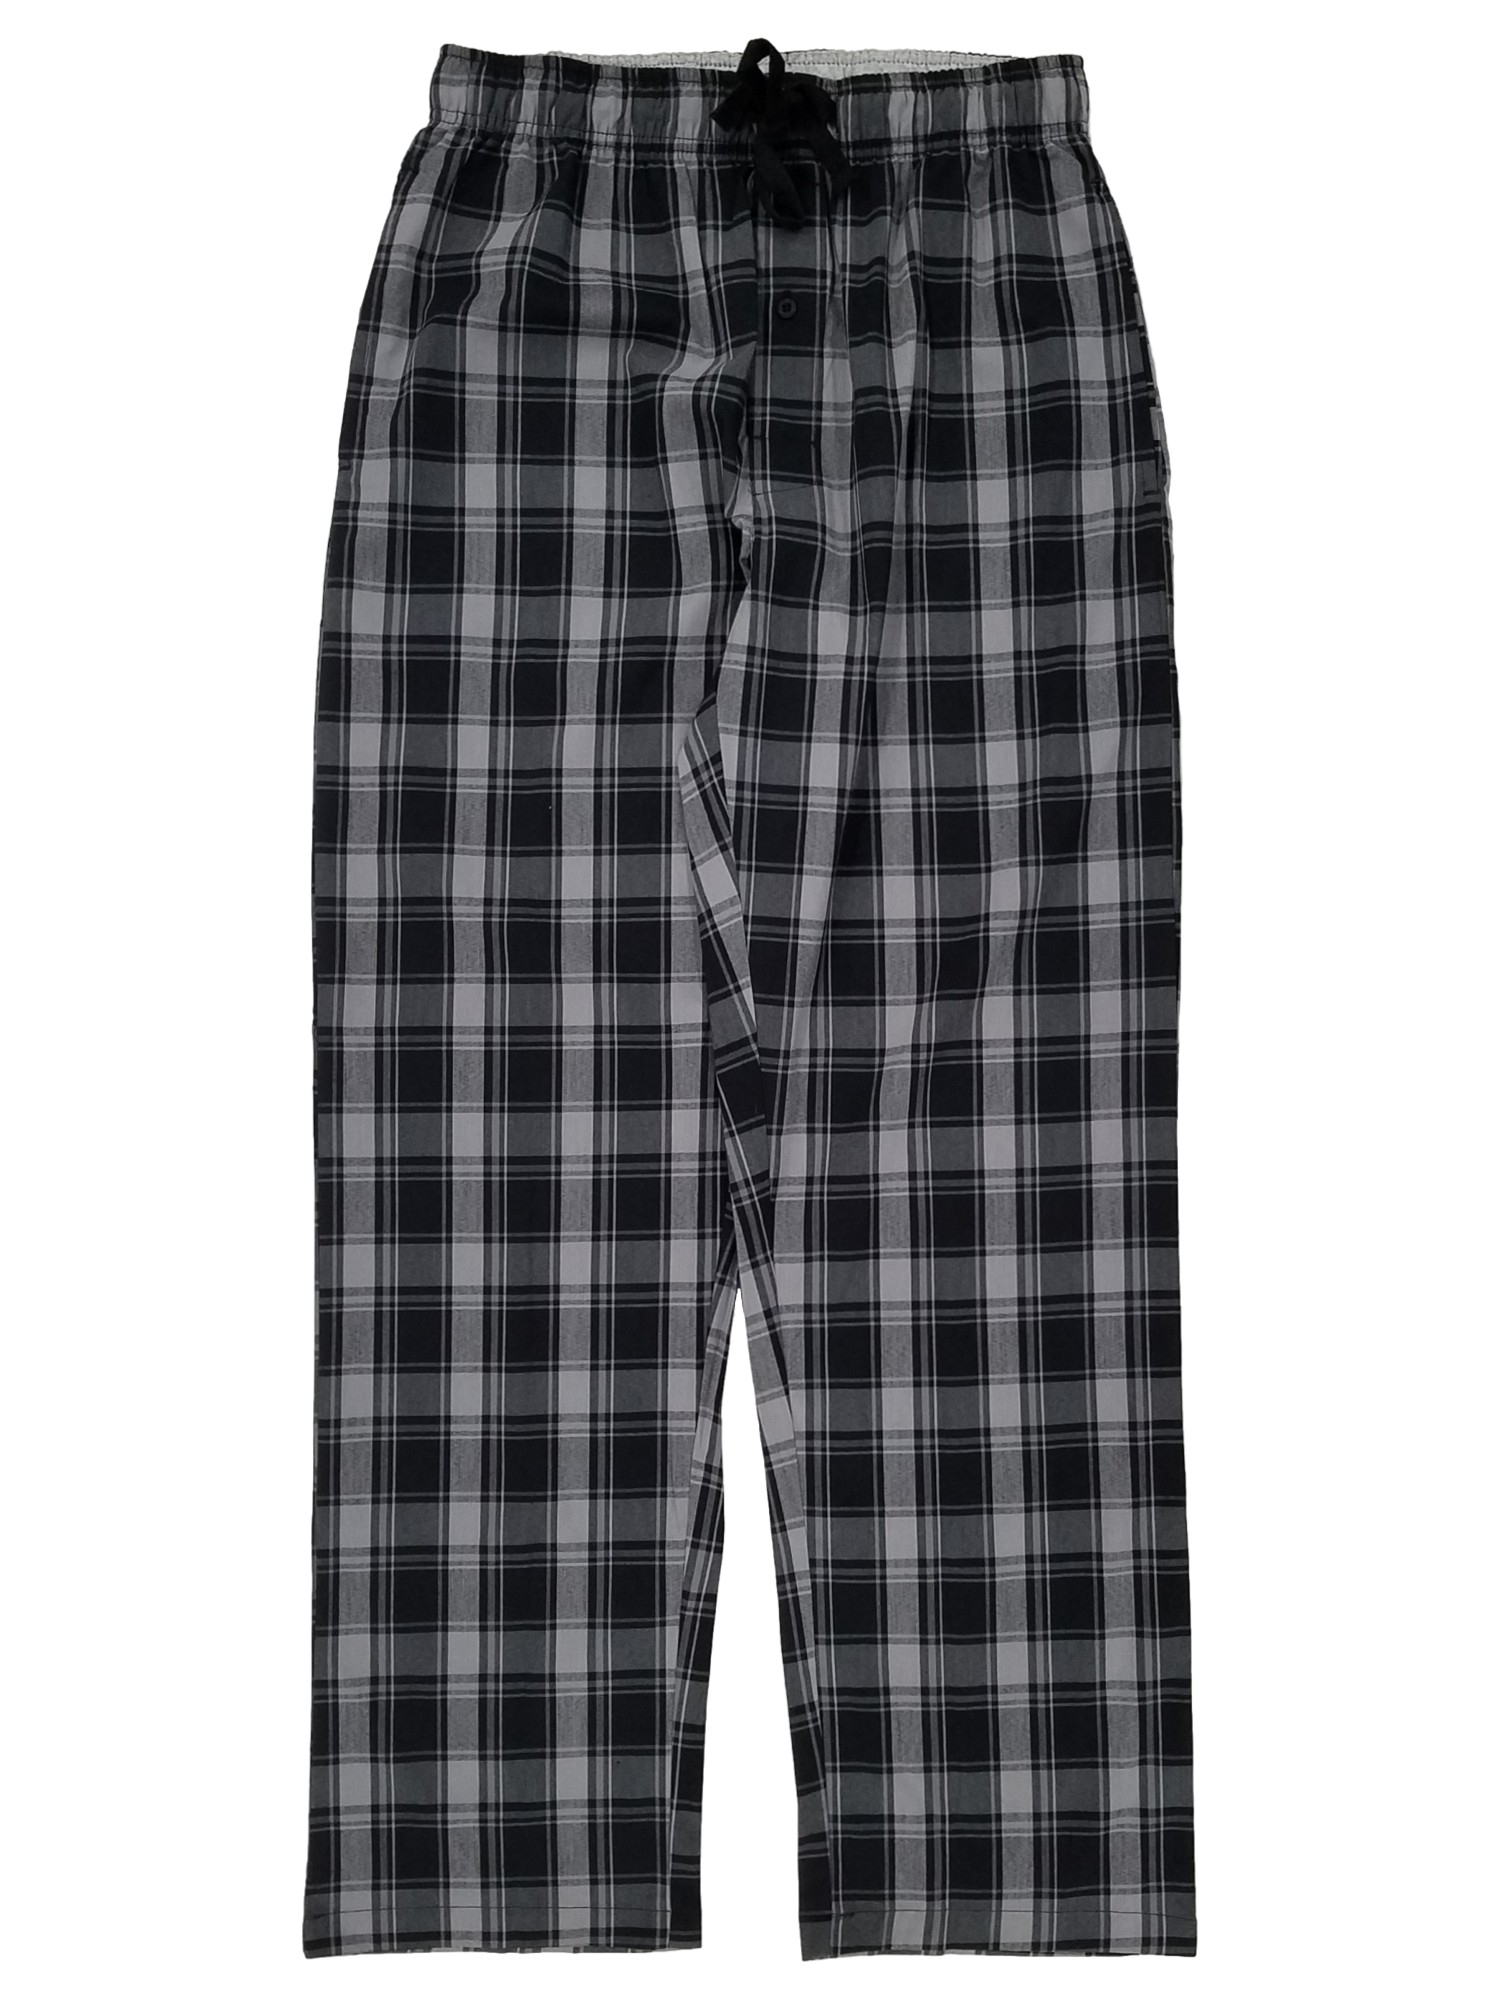 Hanes Mens Black Gray Plaid Tagless Woven Stretch Sleep Pants Pajama Bottoms